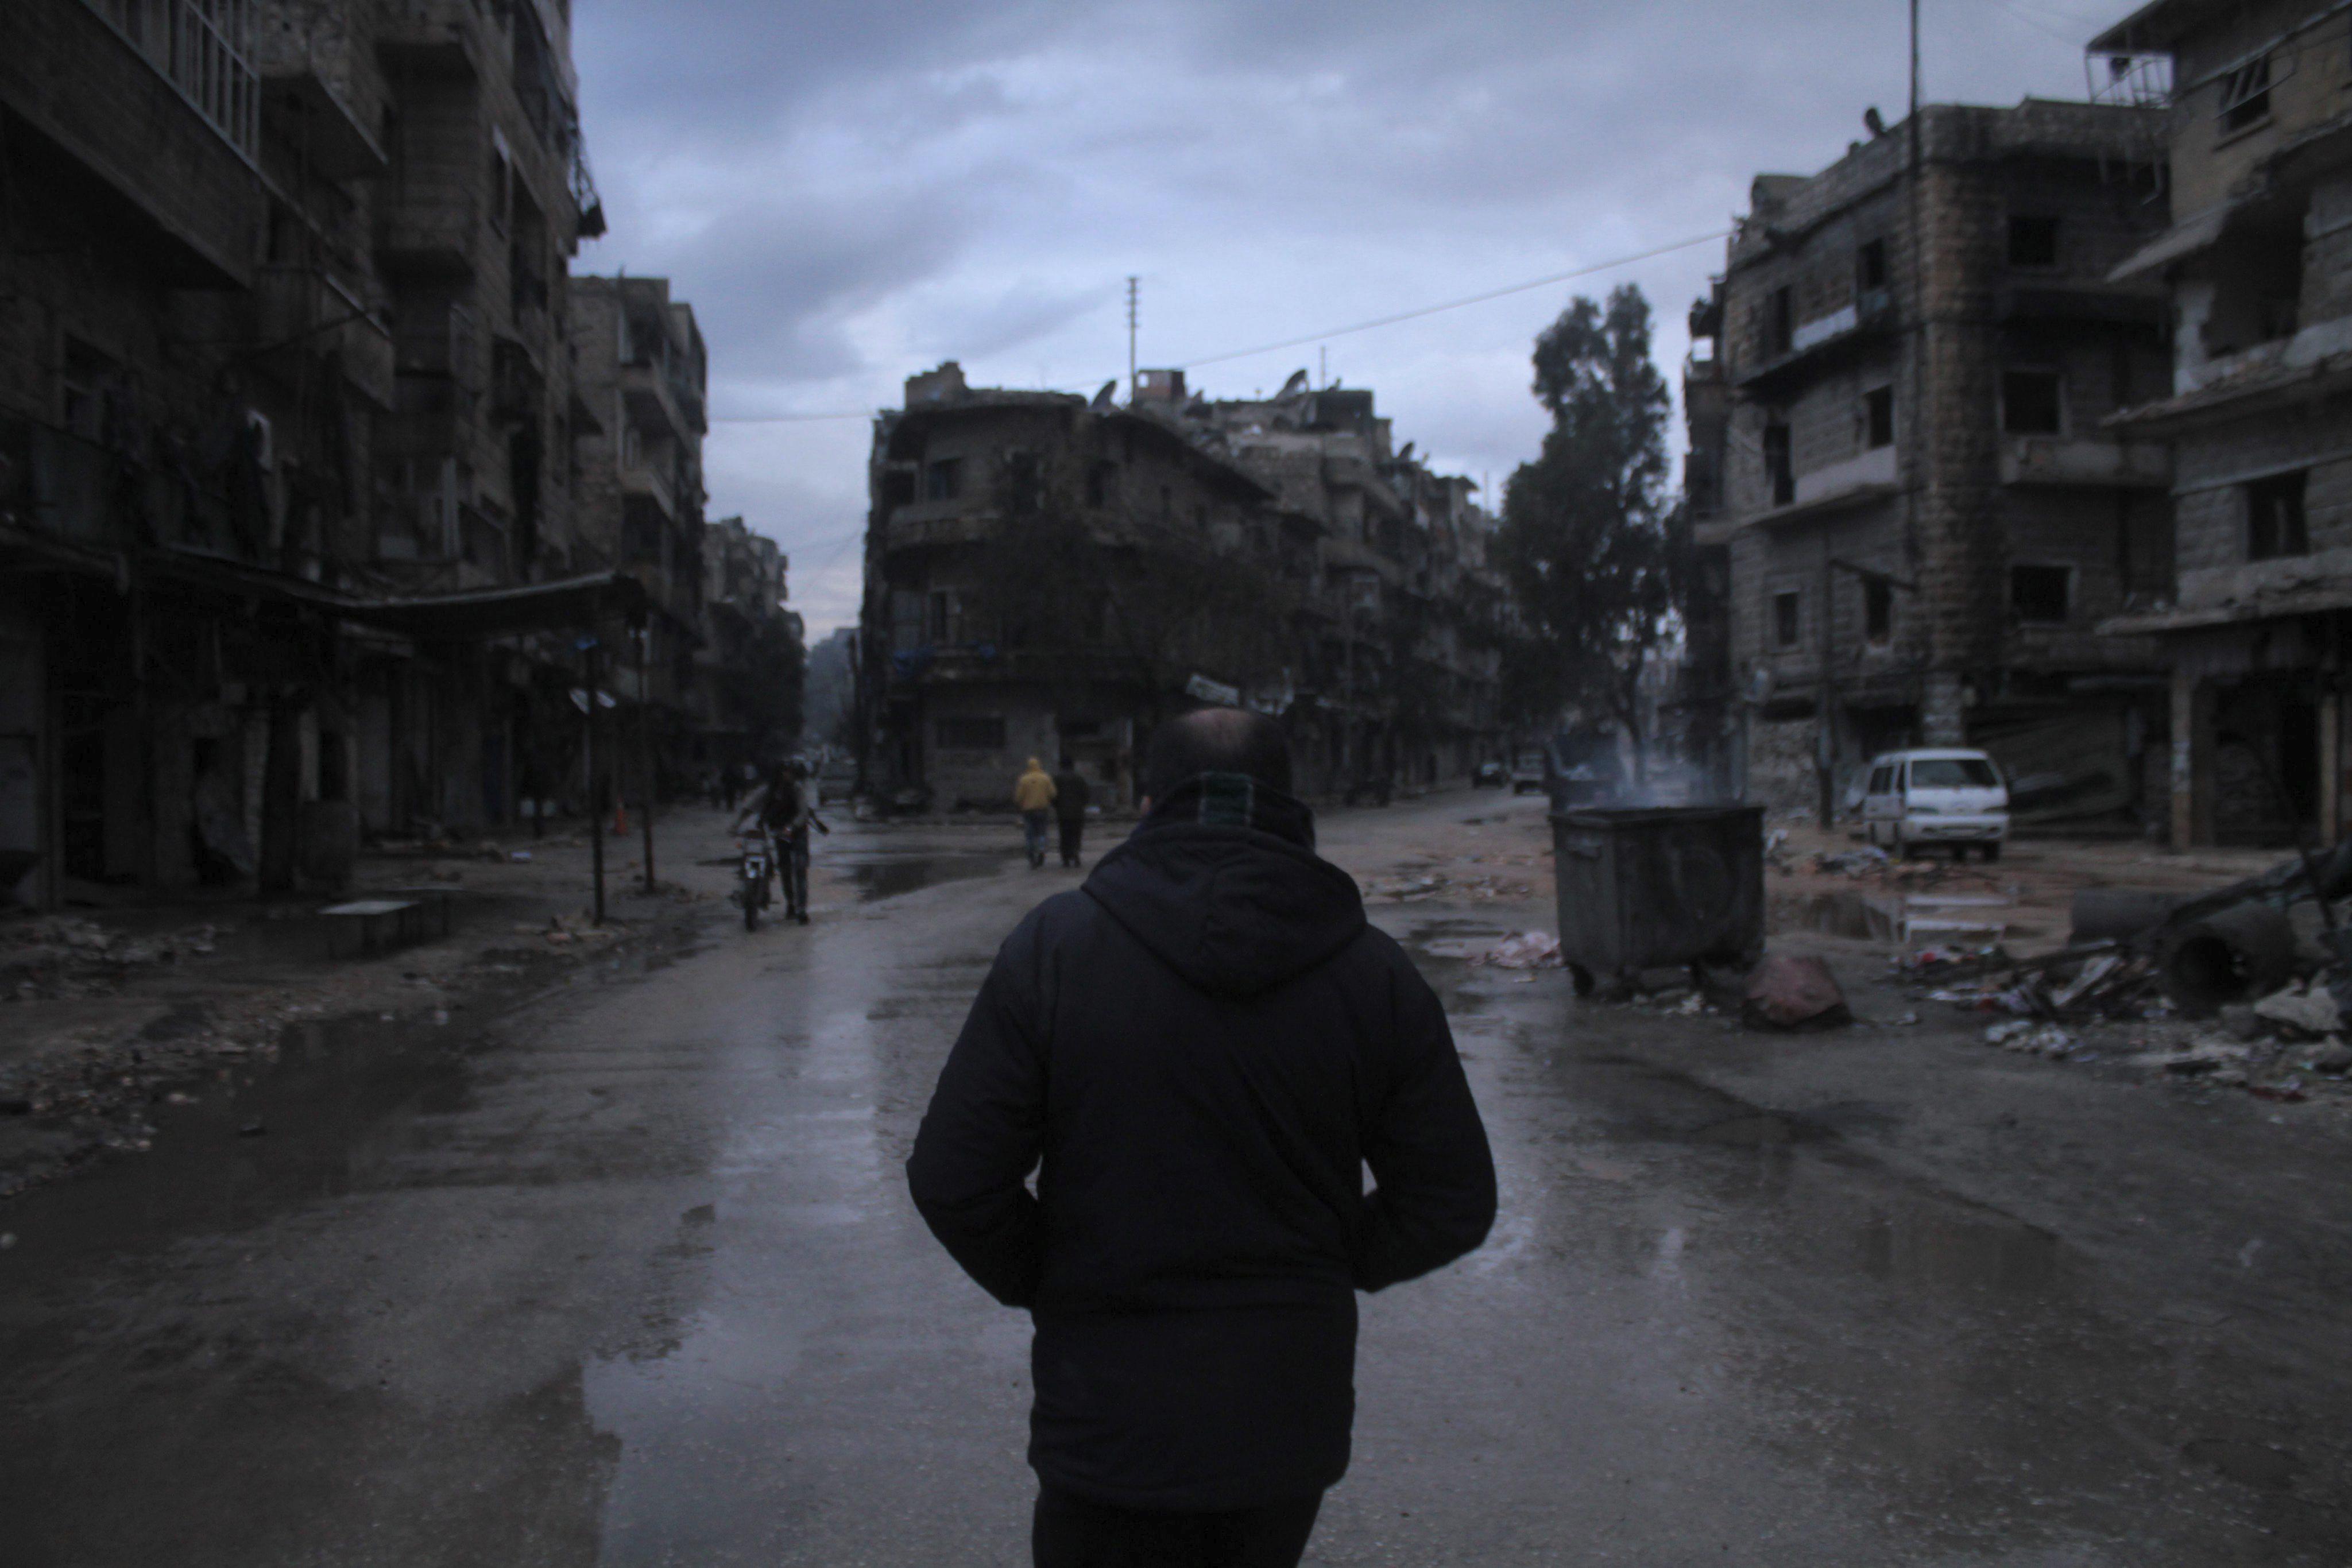 Régimen sirio "ha cruzado todas las líneas" en Aleppo: EU